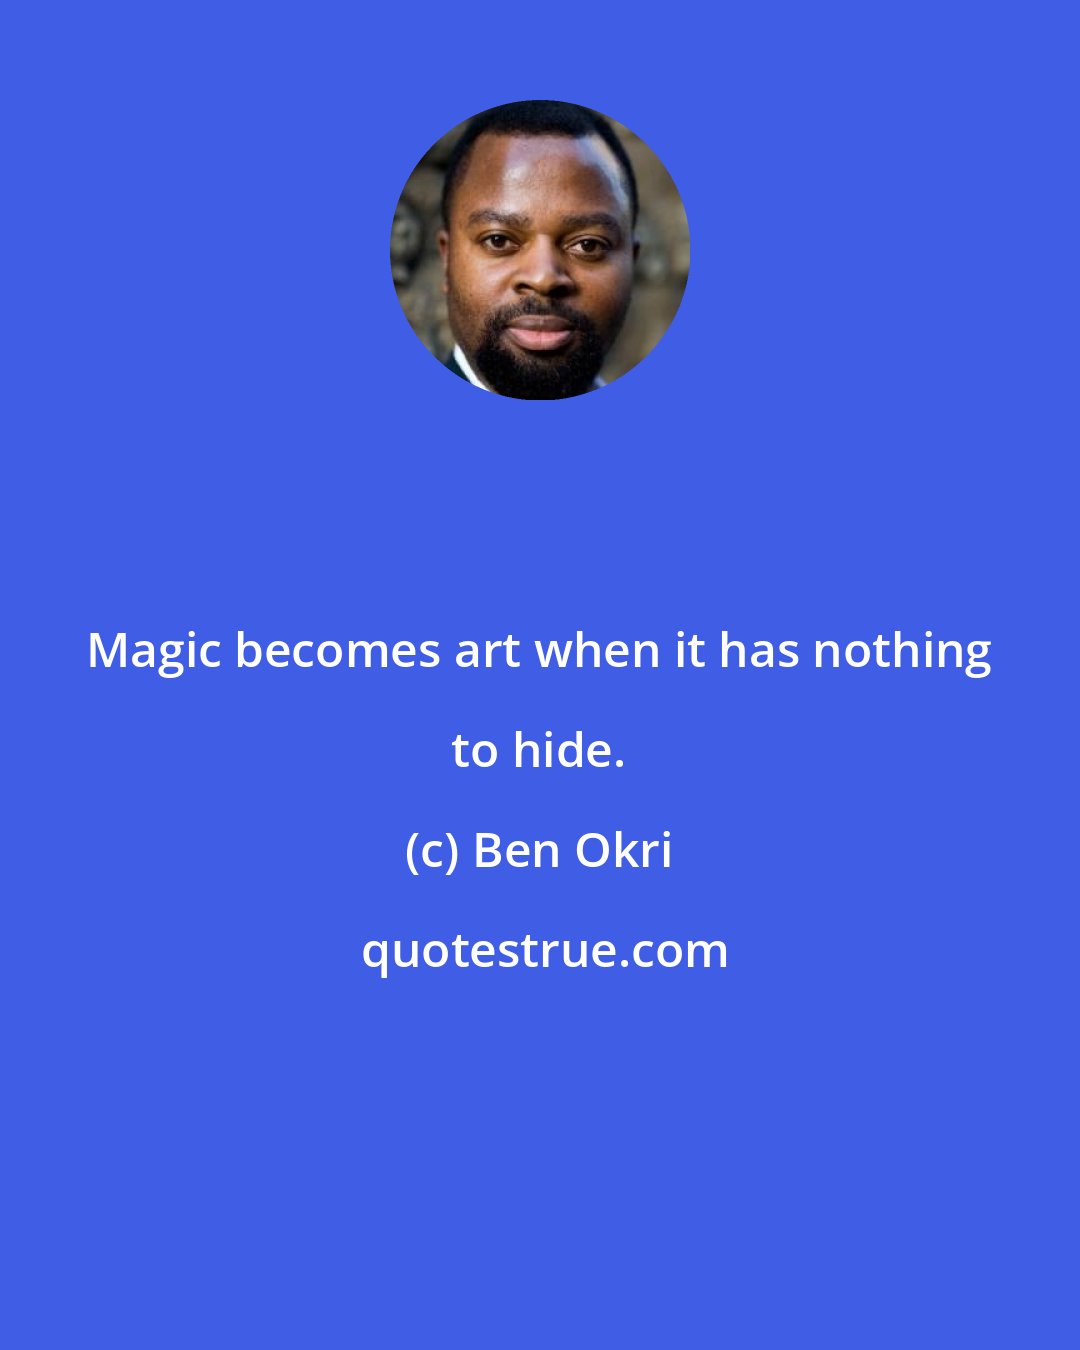 Ben Okri: Magic becomes art when it has nothing to hide.